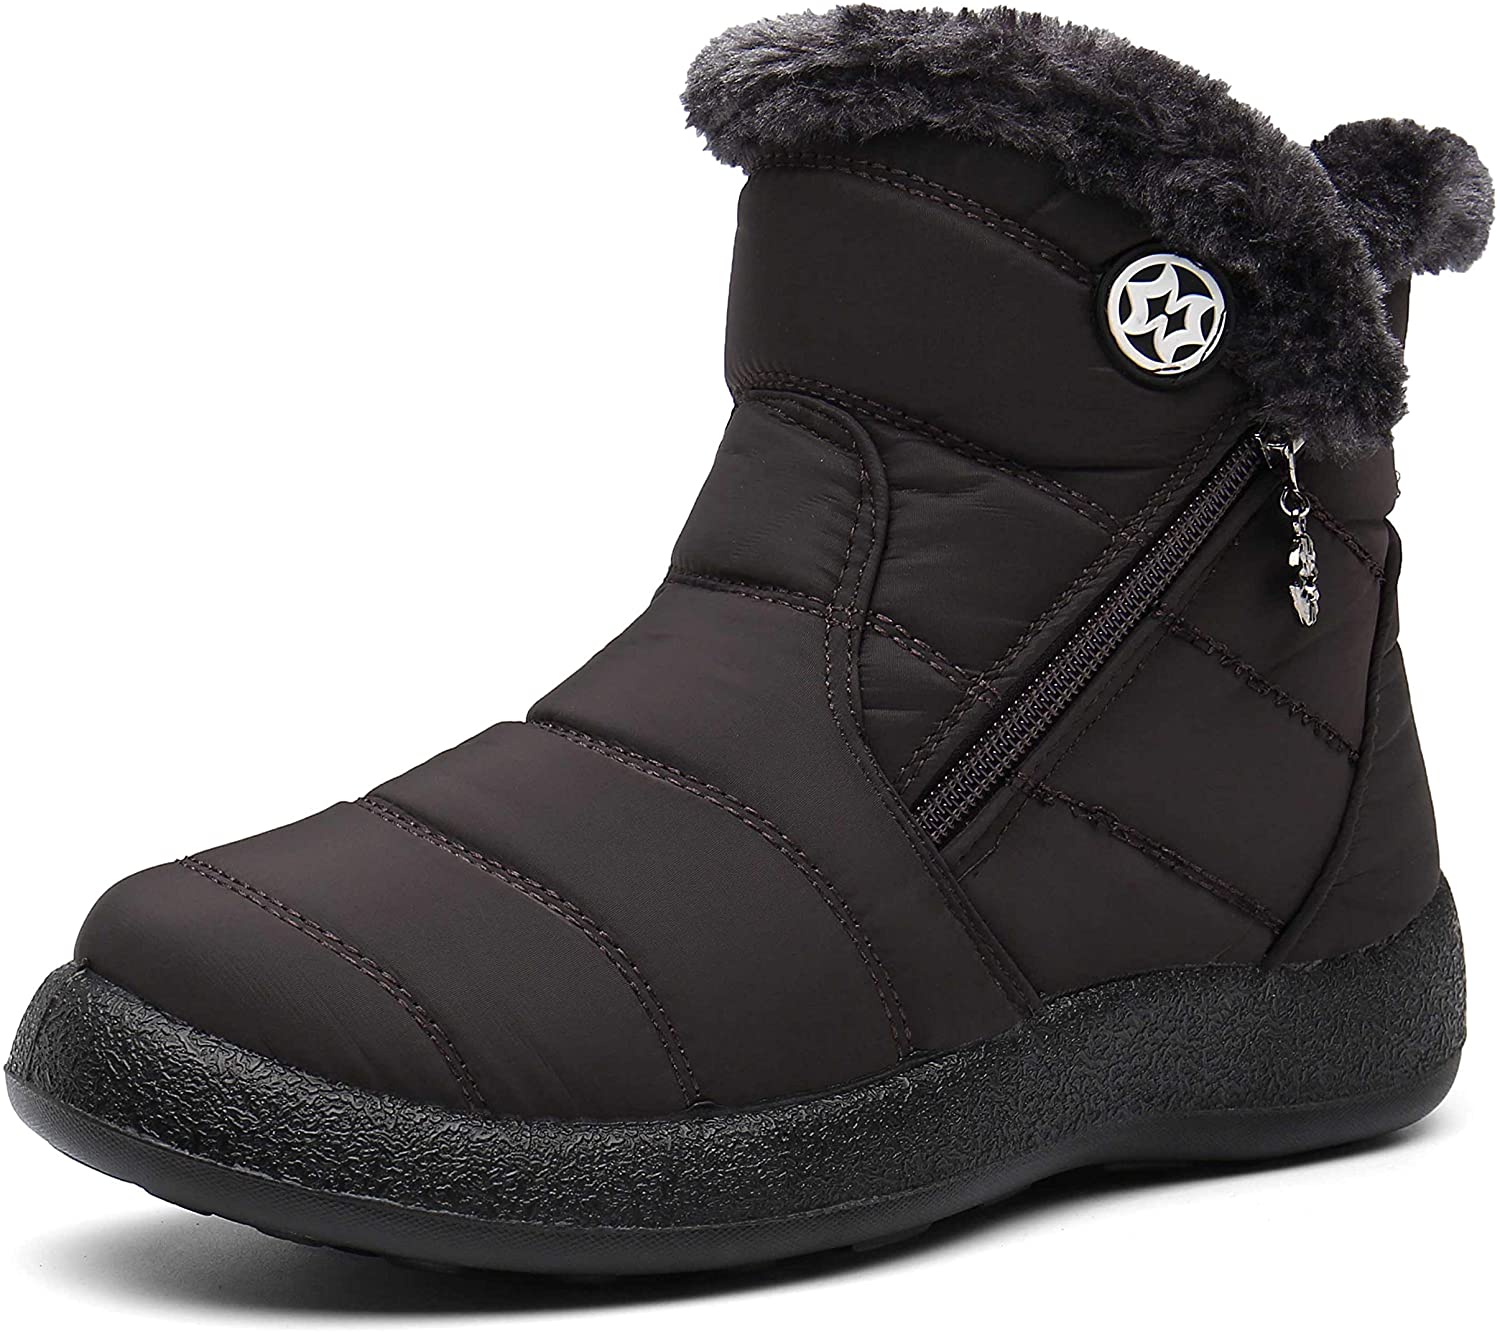 JIASUQI Outdoor Waterproof Ankle Winter Warm Fur Snow Boots for Women Men 